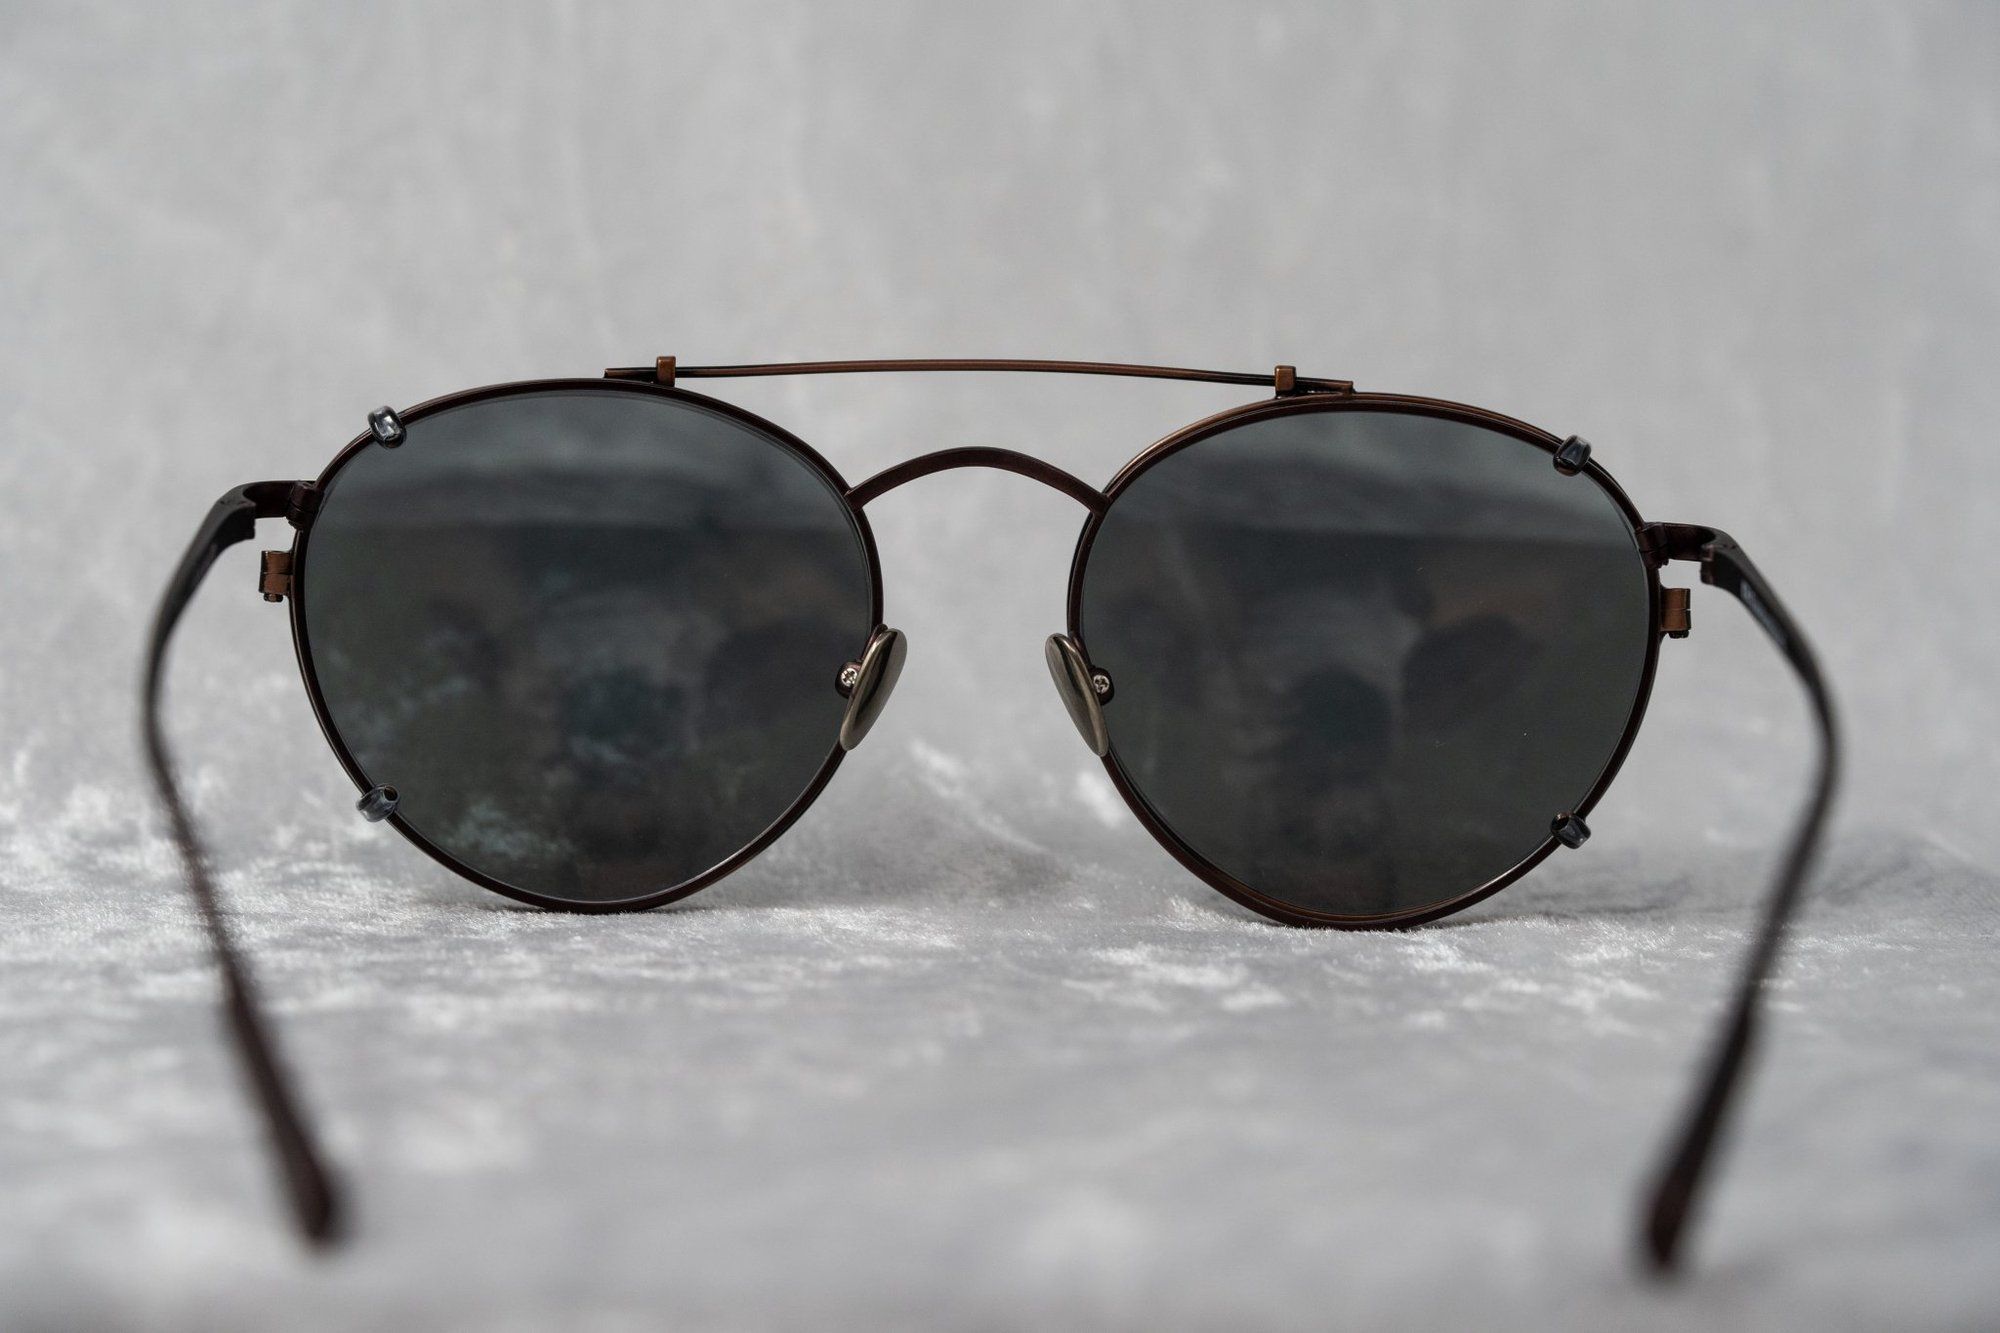  Kris Van Assche KVA 71 sunglasses with clip on (by Linda Farrow) 